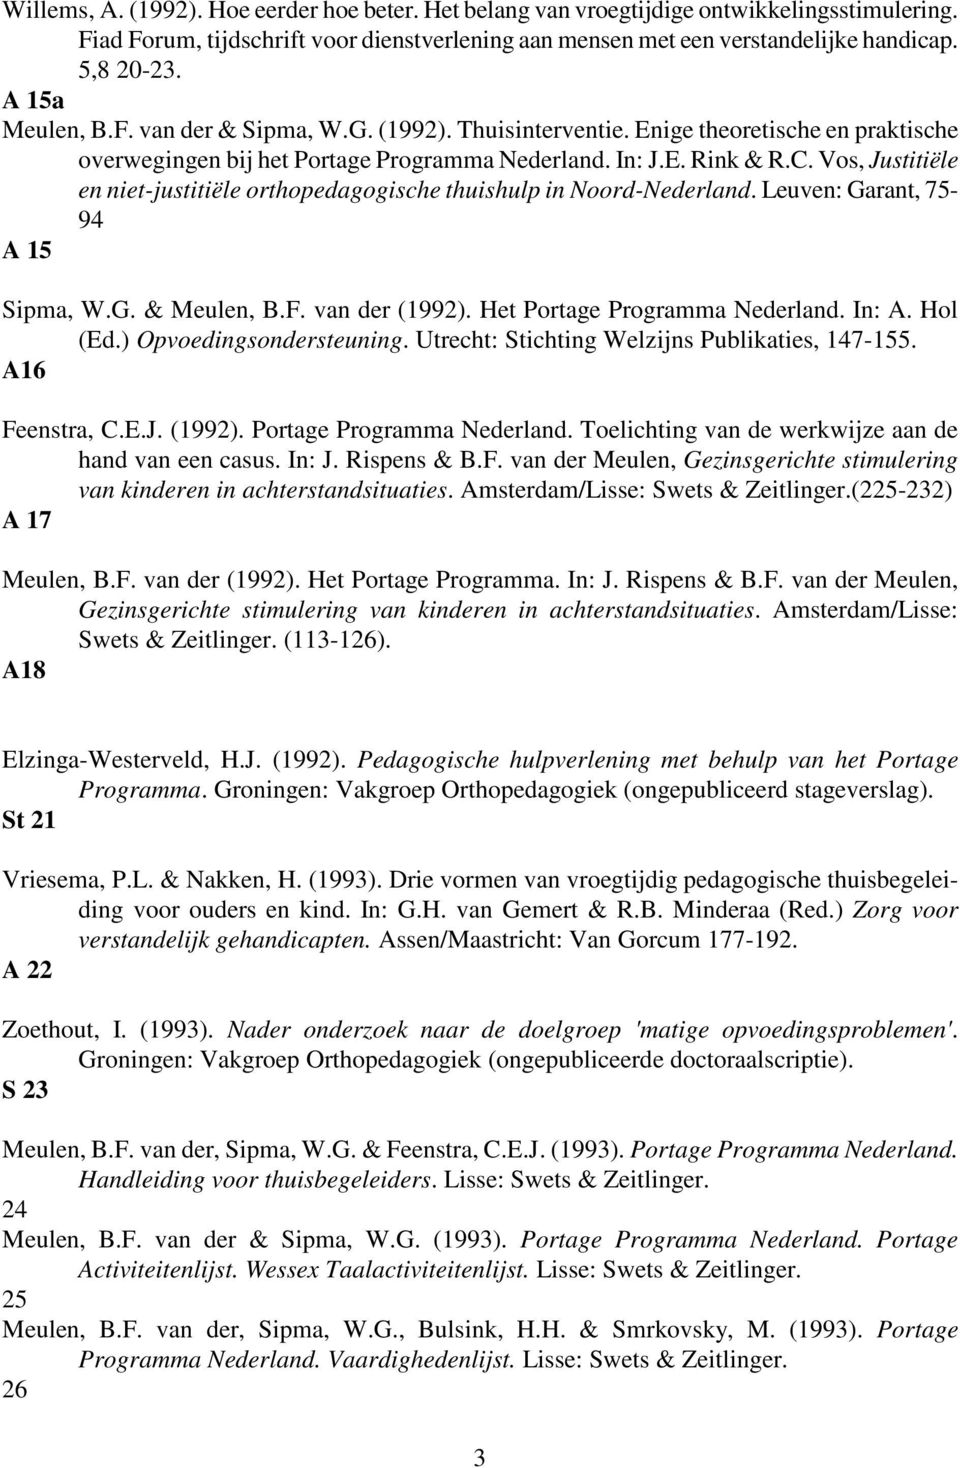 Vos, Justitiële en niet-justitiële orthopedagogische thuishulp in Noord-Nederland. Leuven: Garant, 75-94 A 15 Sipma, W.G. & Meulen, B.F. van der (1992). Het Portage Programma Nederland. In: A.